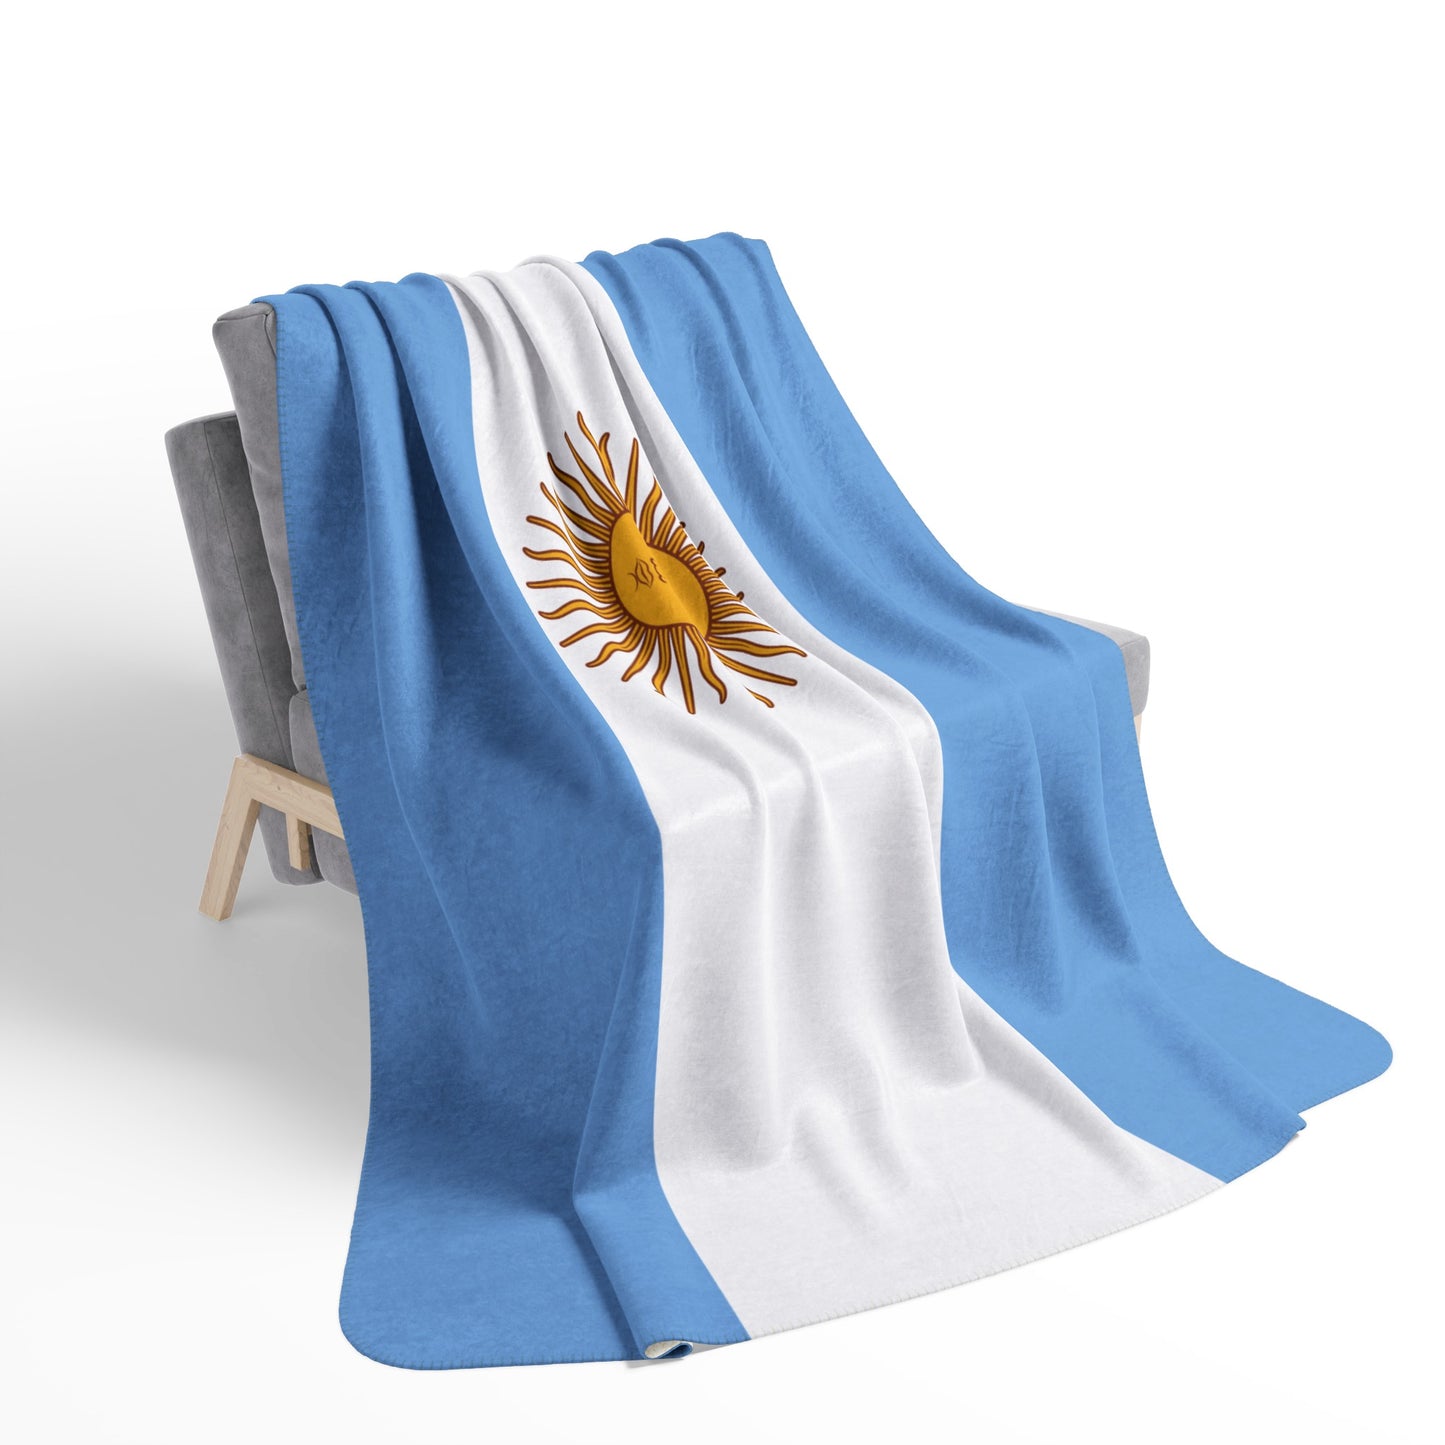 Argentina Flag Sherpa Fleece Blanket